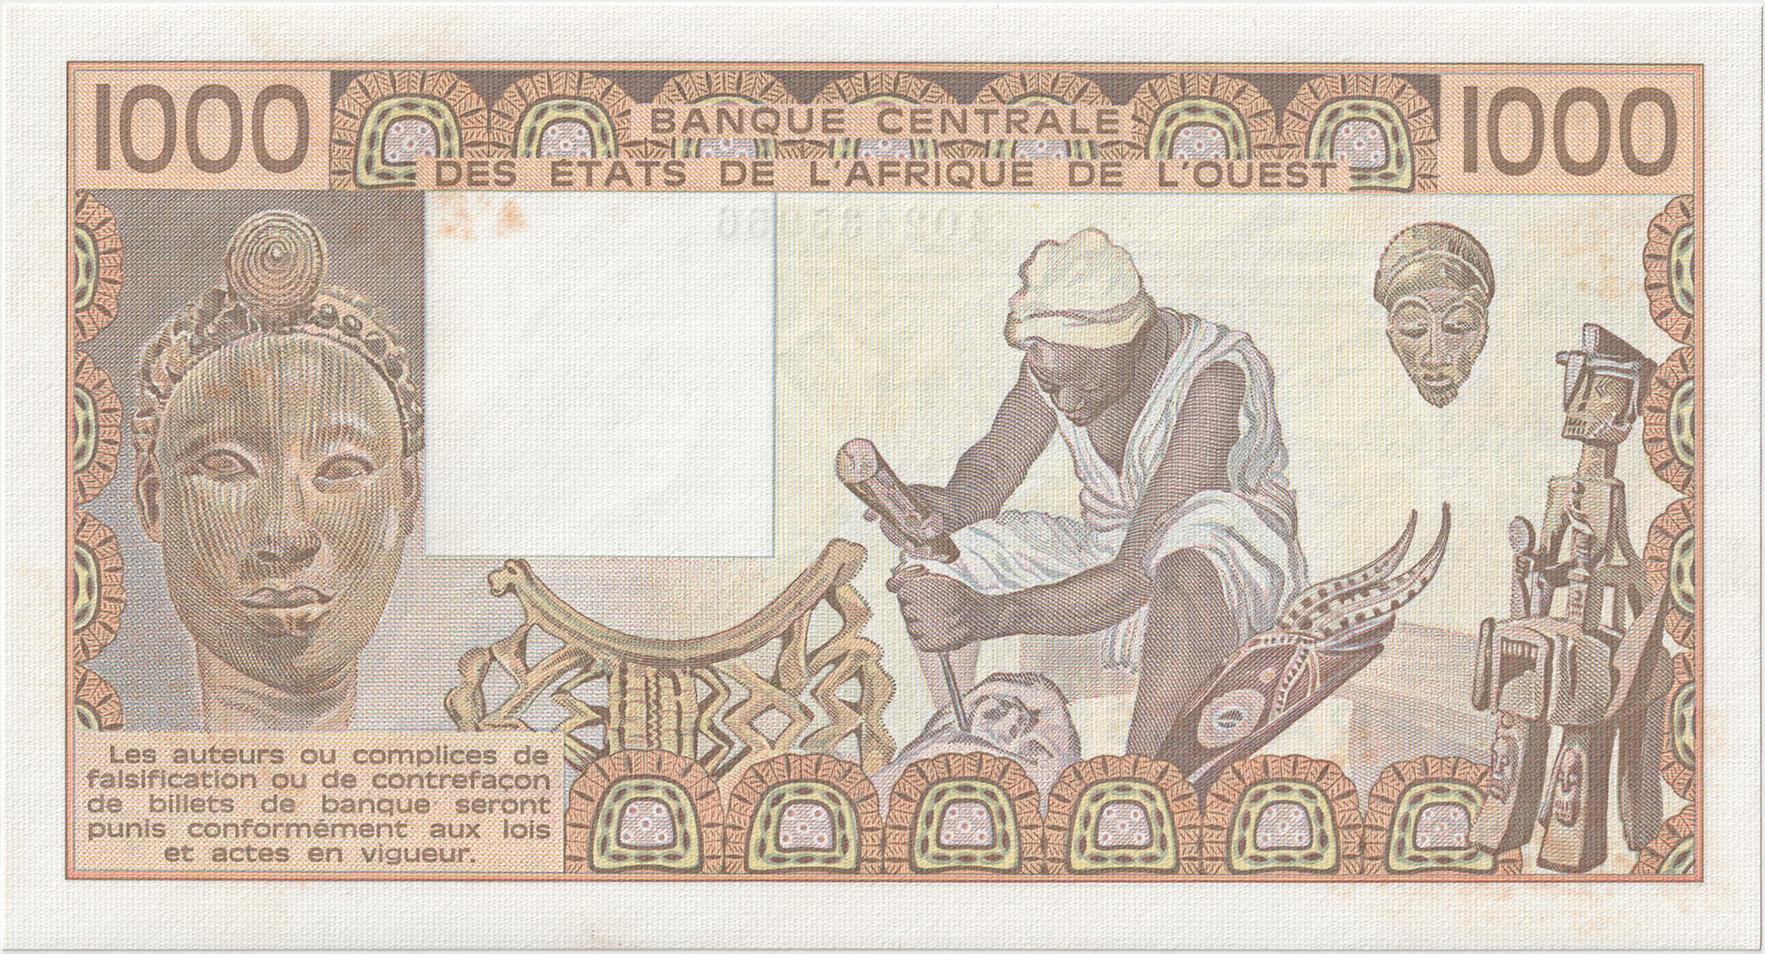 Ivory-Coast_1000-Franc-note_1987_africa-direct_eBay_16480841773_rev01a.jpg